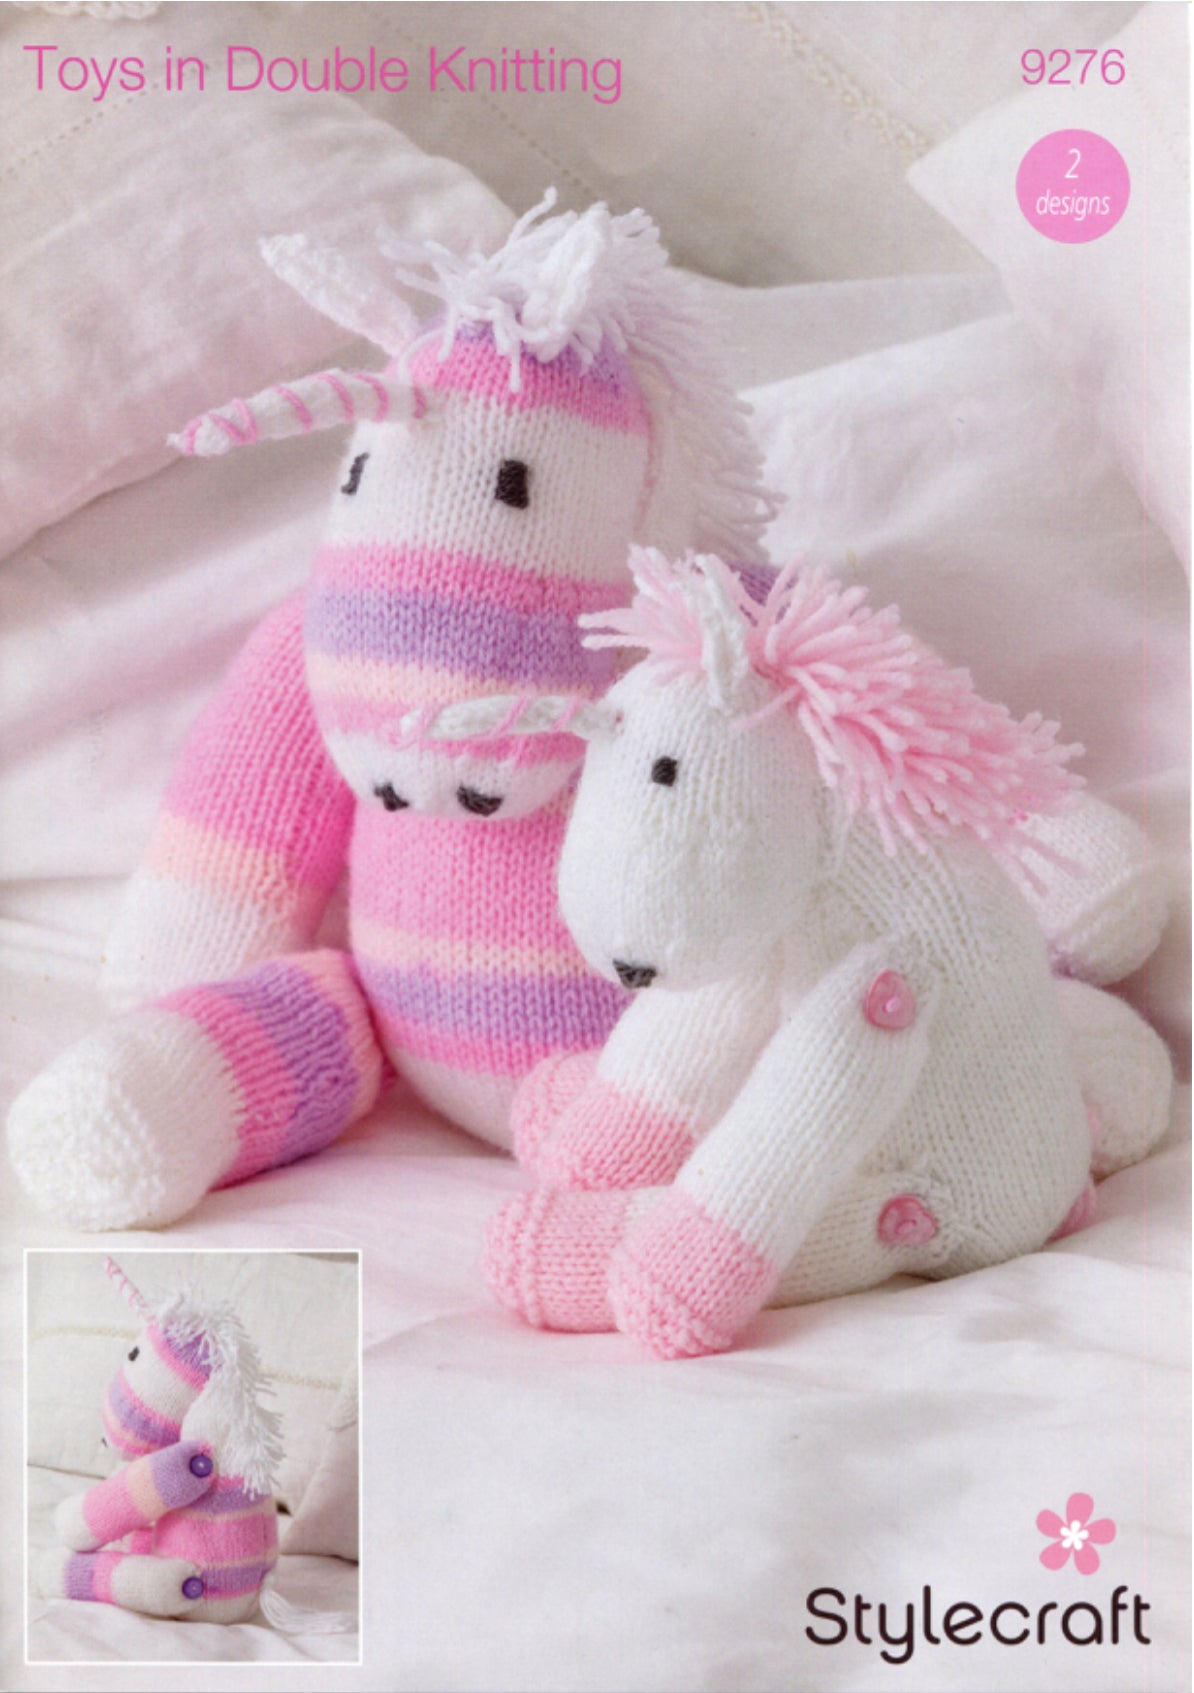 Stylecraft 9276 knitted Unicorn Toys